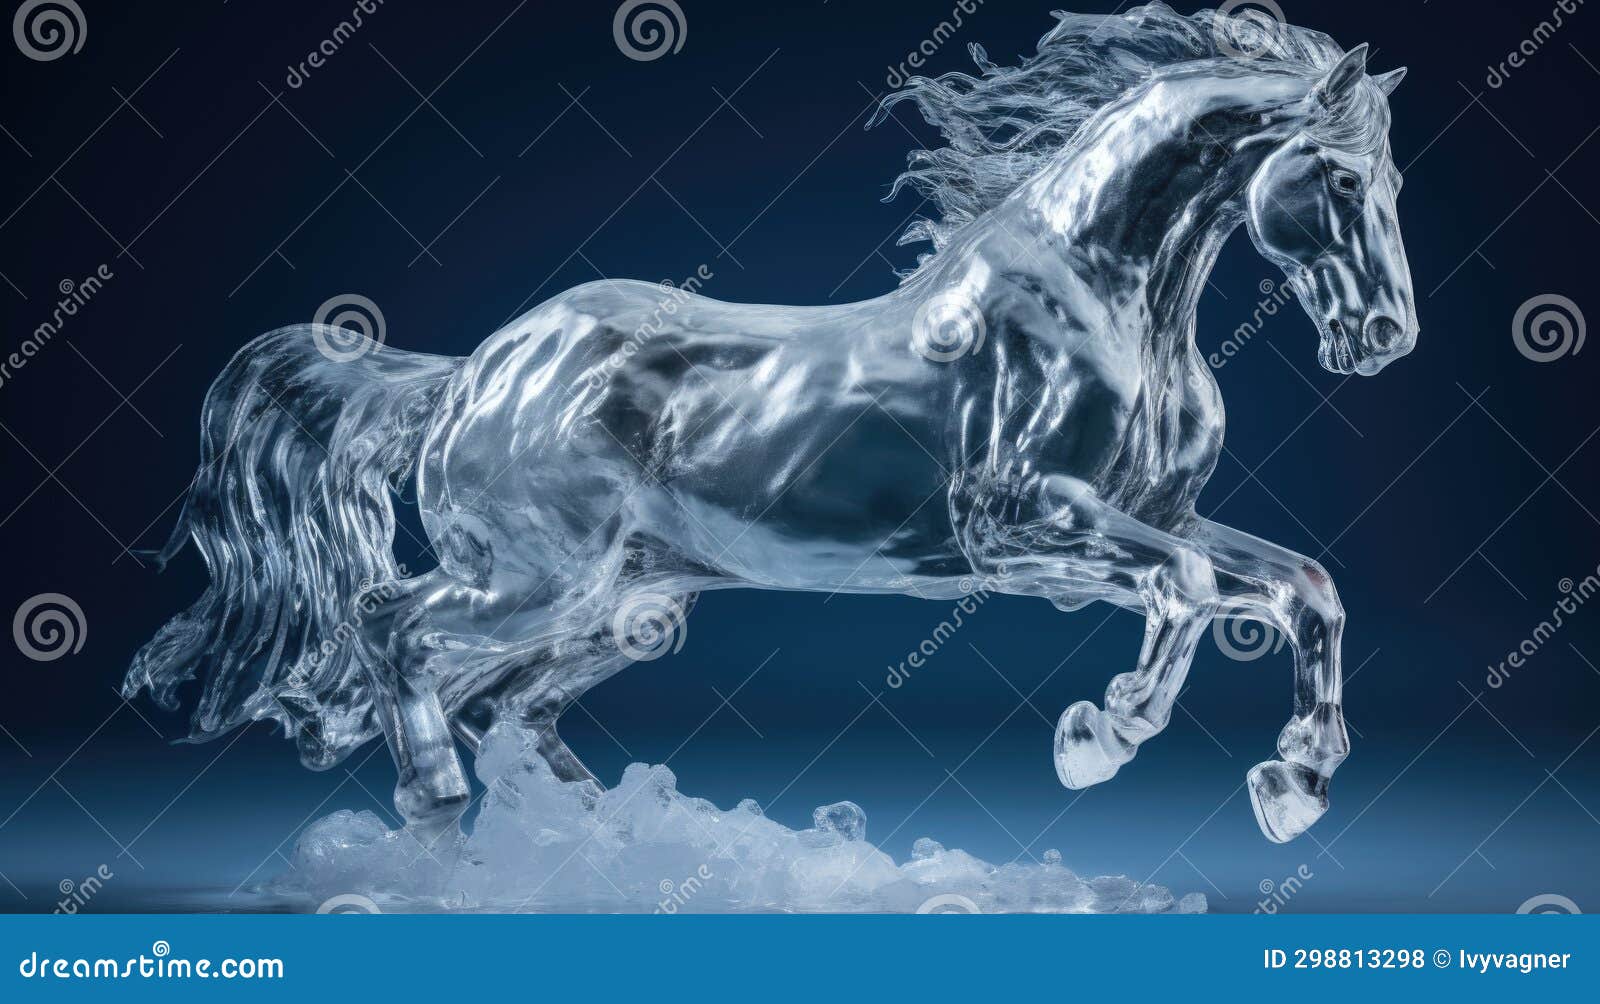 Majestic Horse Galloping in the Wild | AI Art Generator | Easy-Peasy.AI